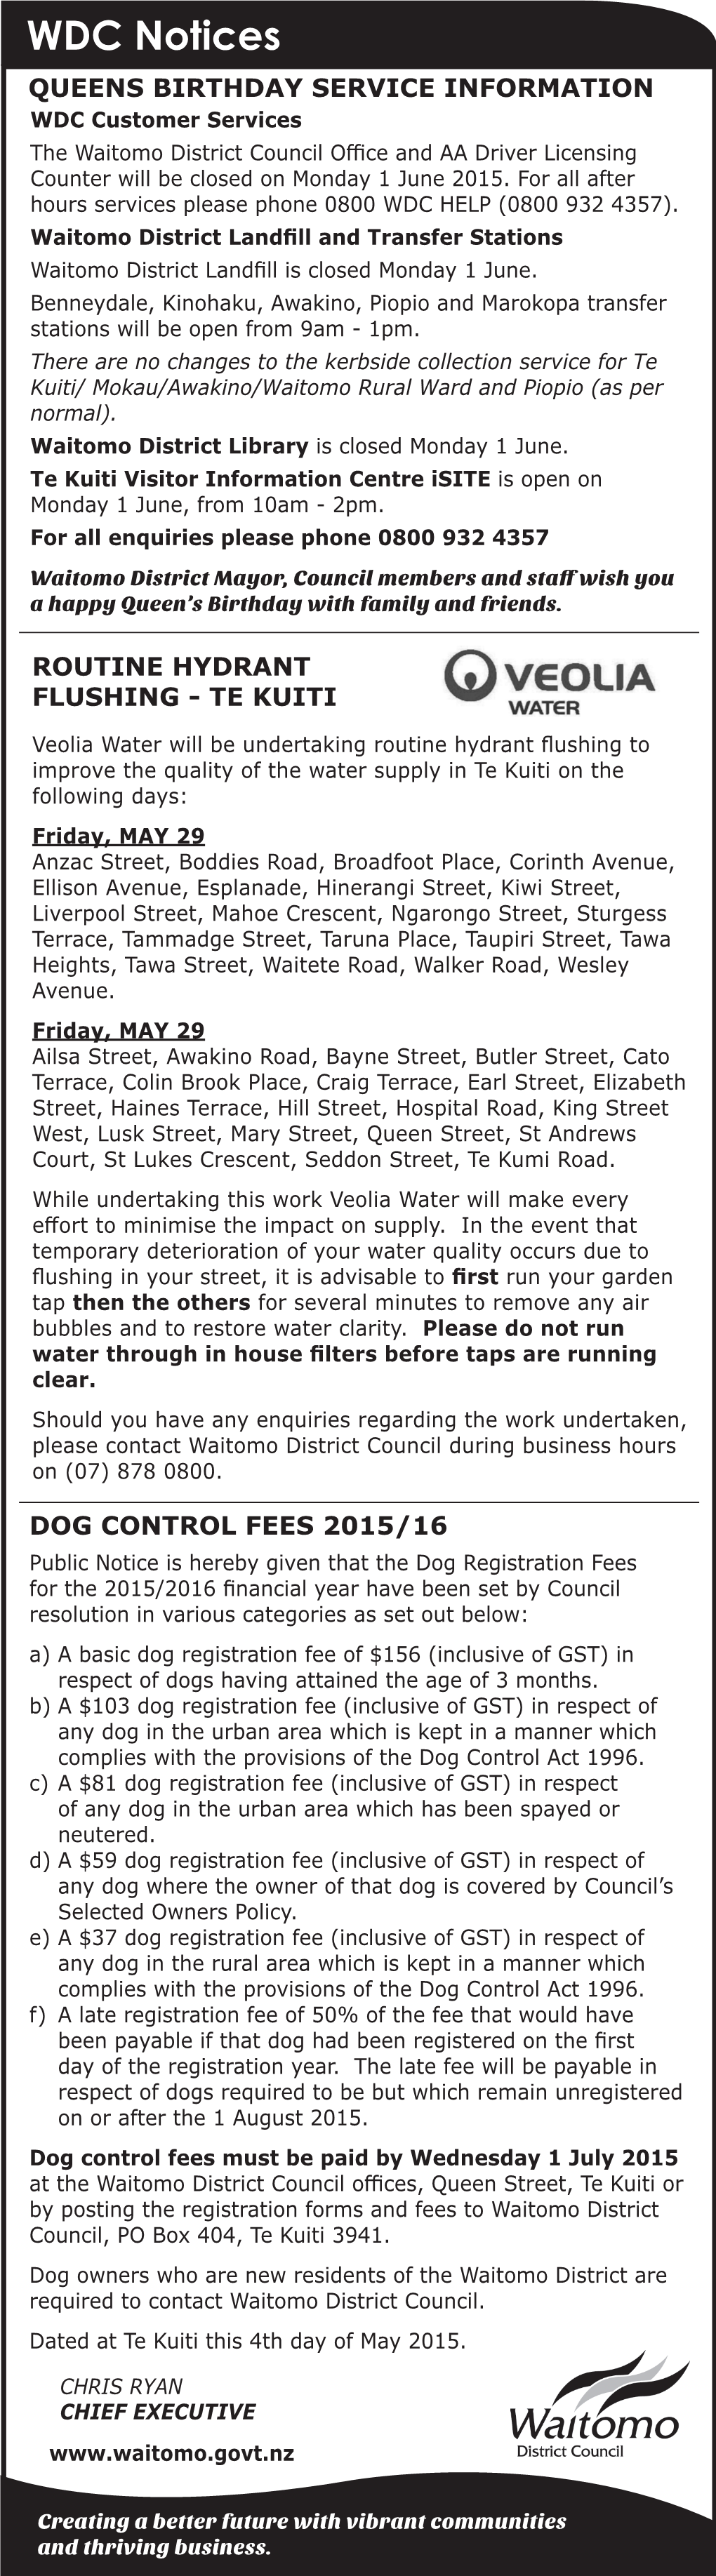 Te Kuiti. Dog Control Fees 2015/16. (PDF